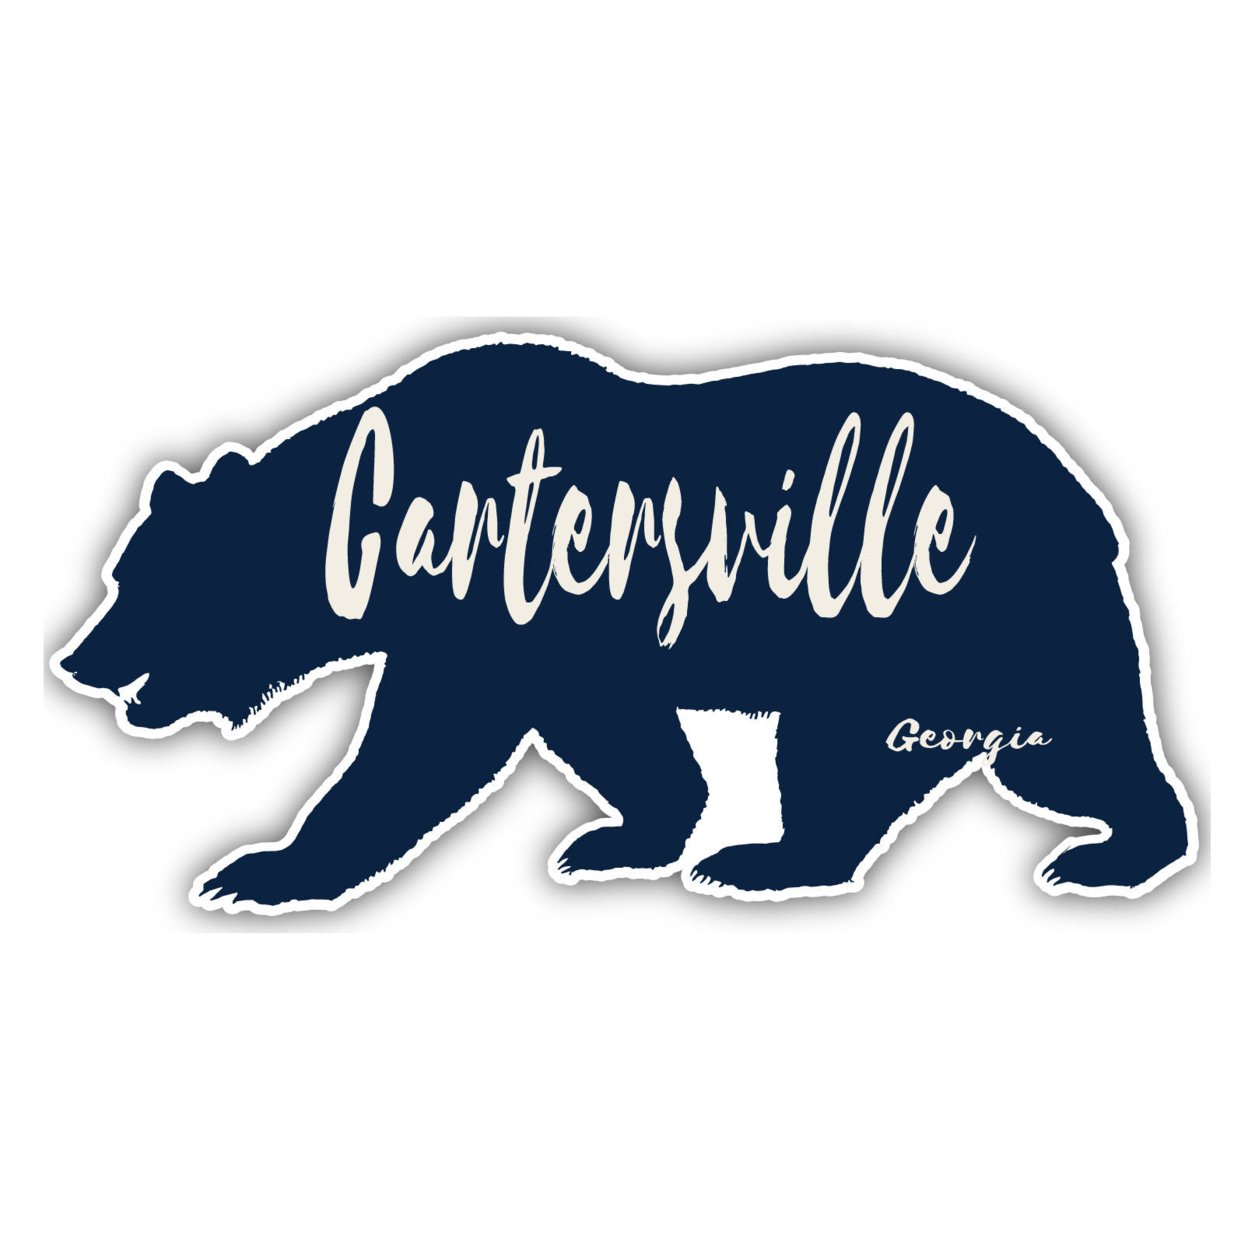 Cartersville Georgia Souvenir Decorative Stickers (Choose Theme And Size) - 4-Pack, 10-Inch, Bear